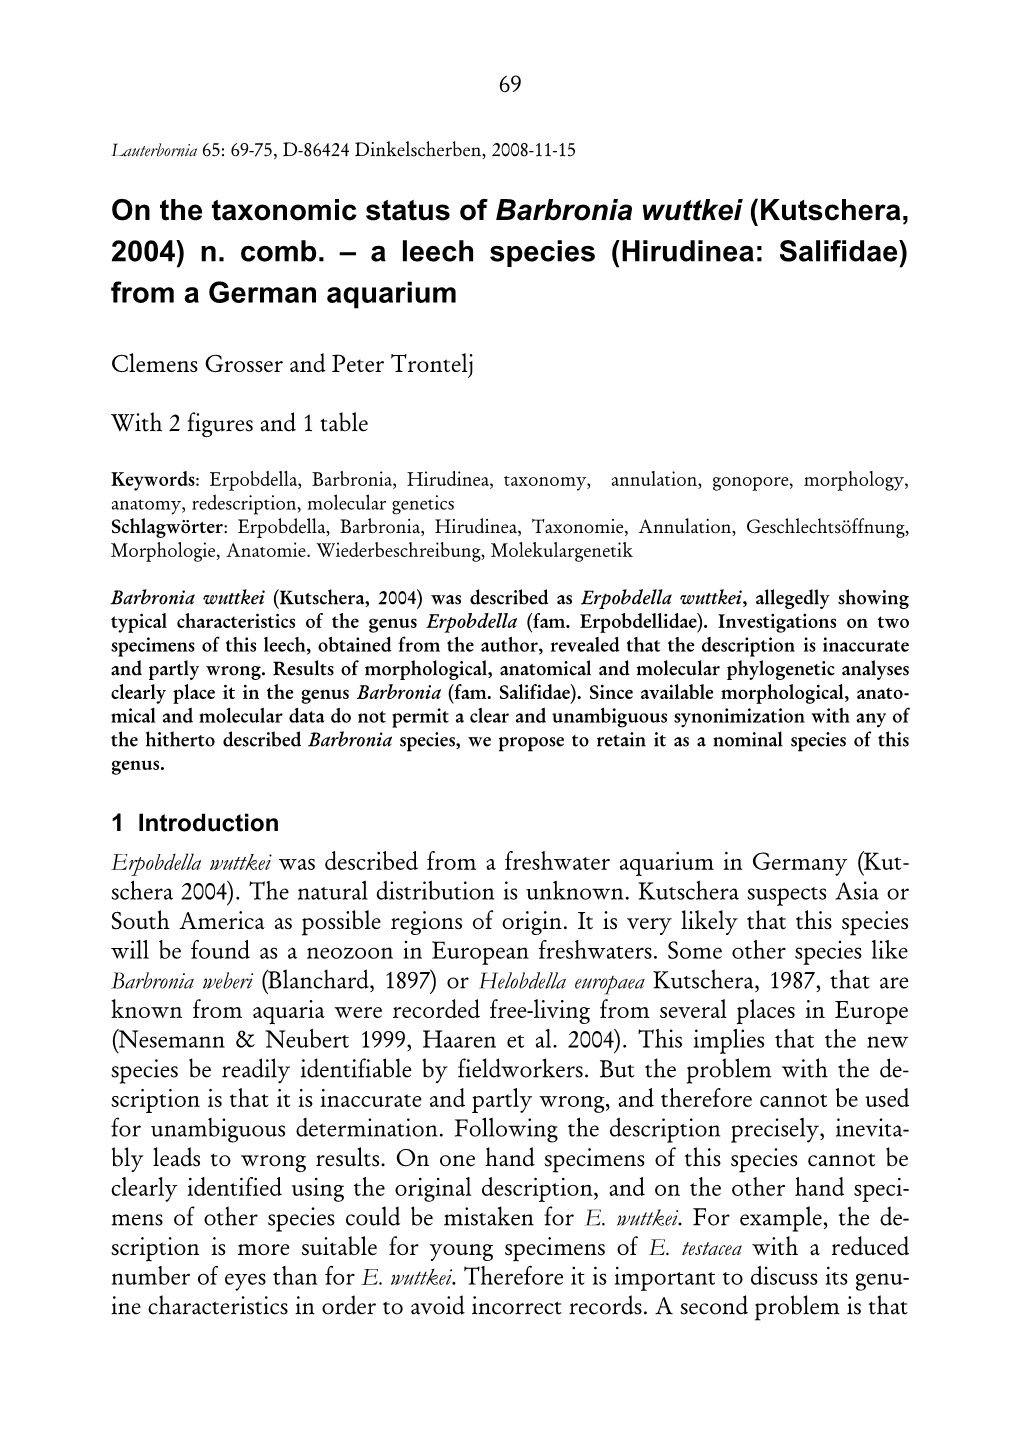 On the Taxonomic Status of Barbronia Wuttkei (Kutschera, 2004) N. Comb